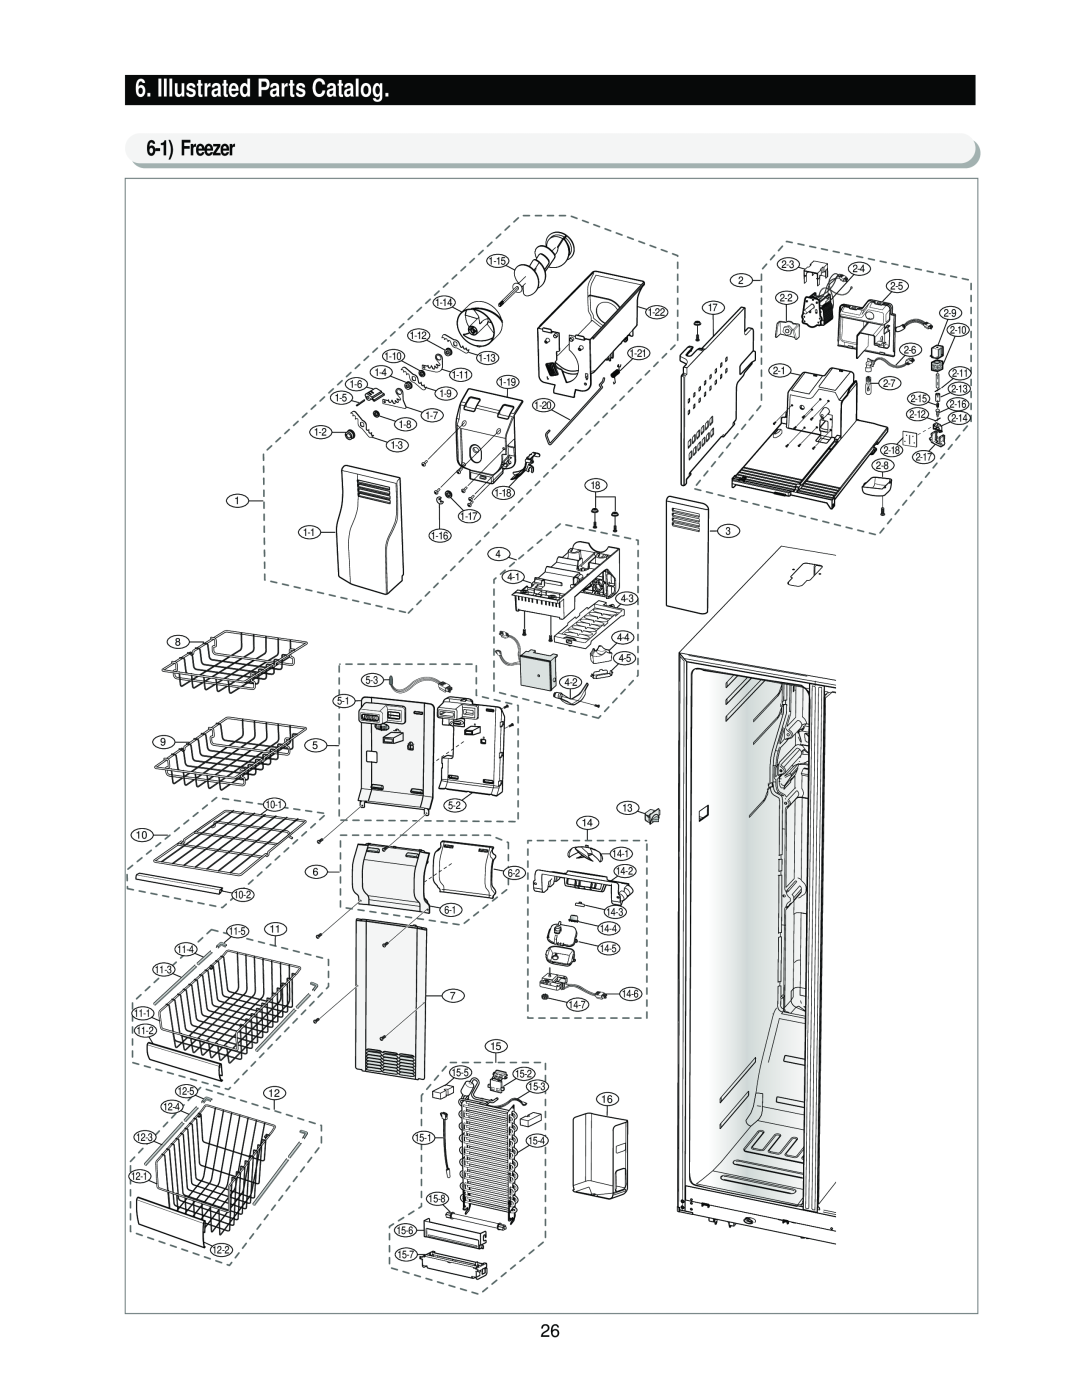 Samsung RS2*3* manual Illustrated Parts Catalog, 6-1Freezer 